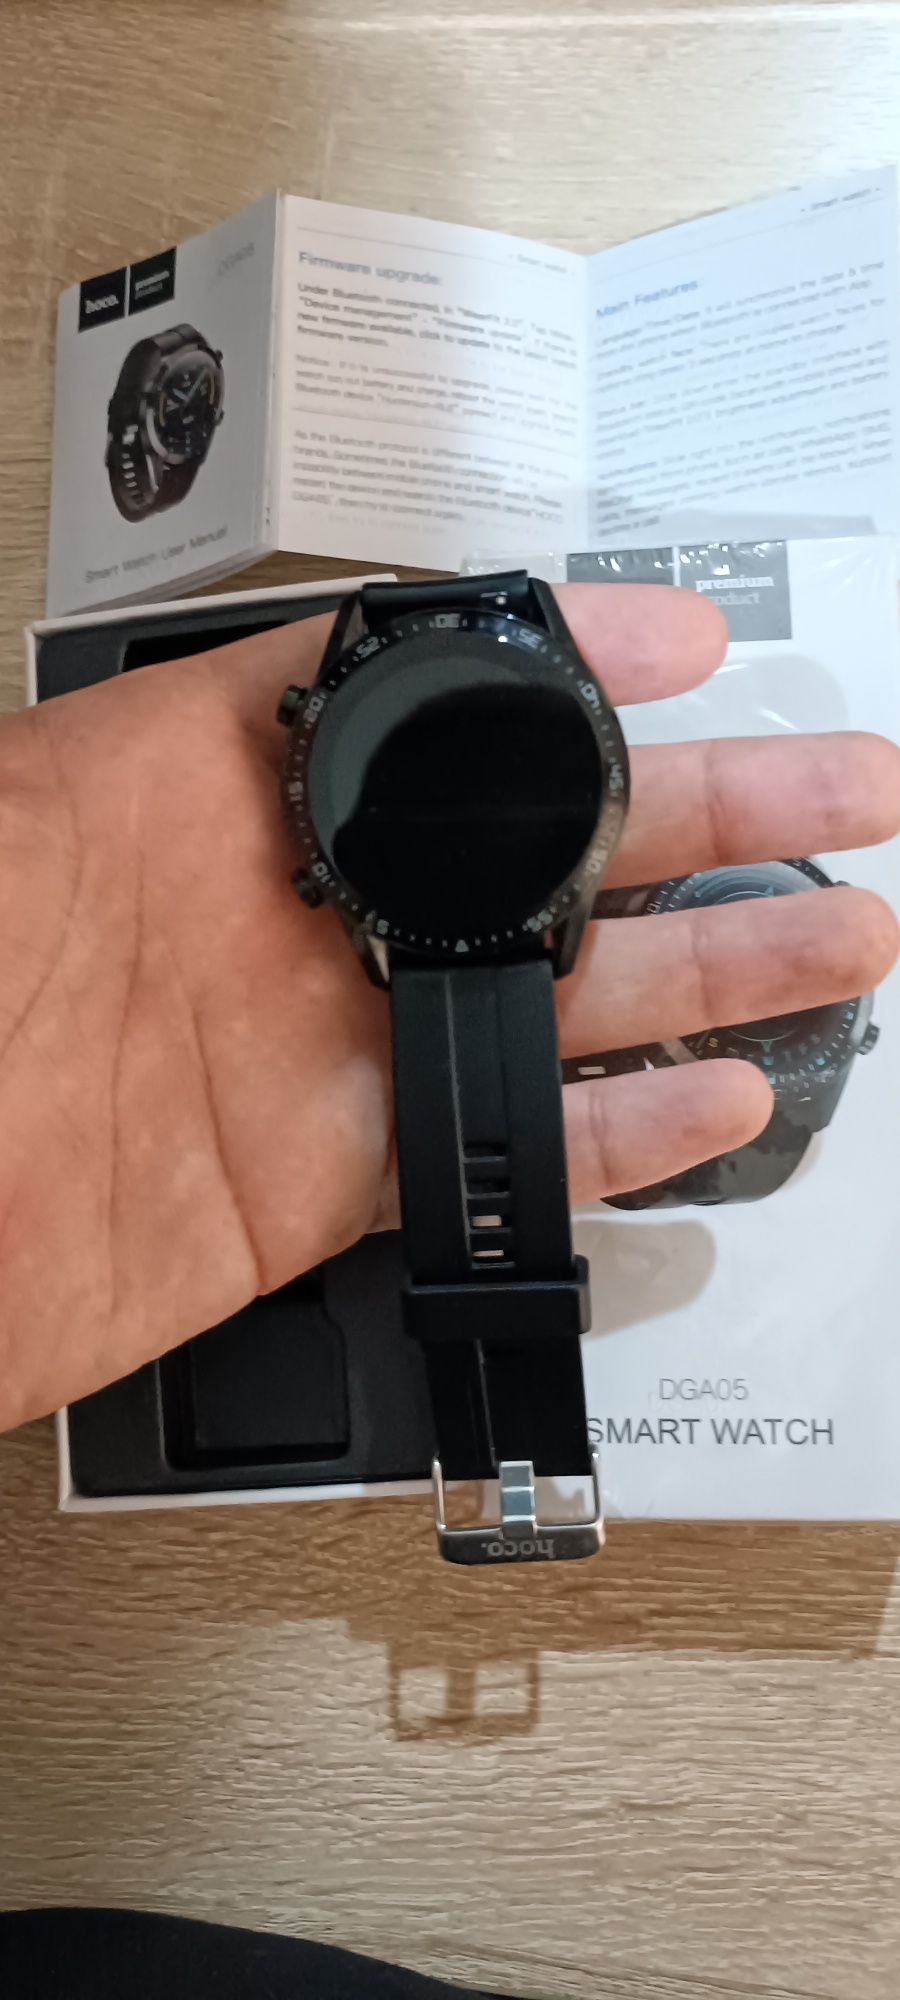 Hoco smart watch holati zoʻr